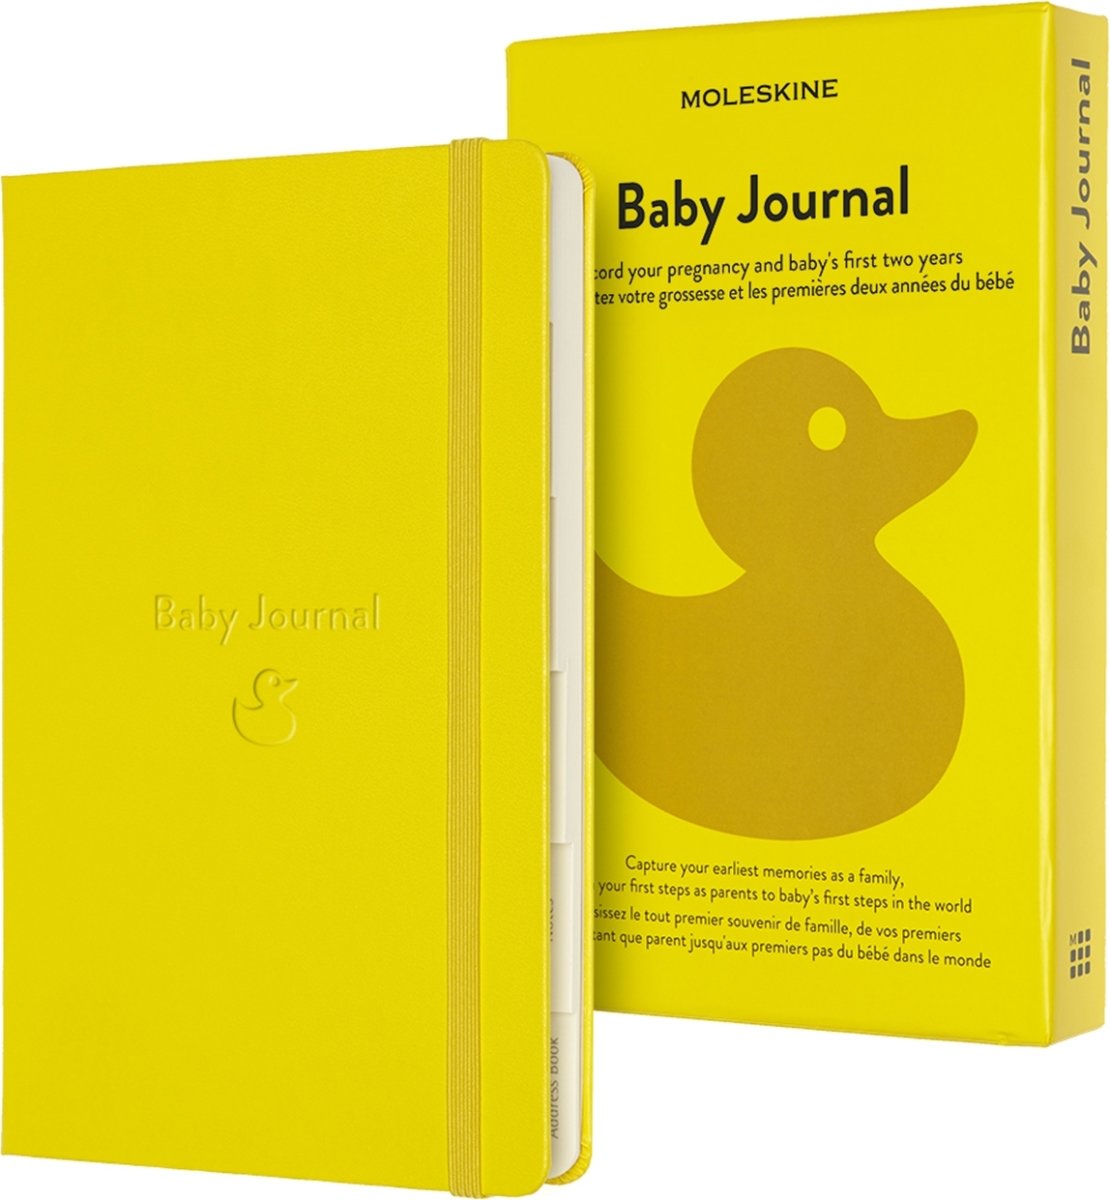 Moleskine Passion Journal | Baby